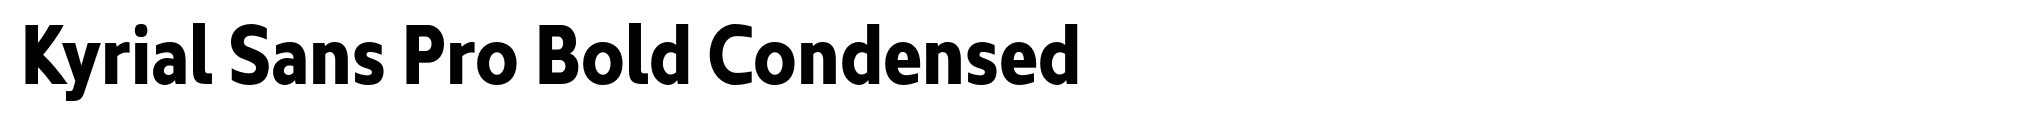 Kyrial Sans Pro Bold Condensed image